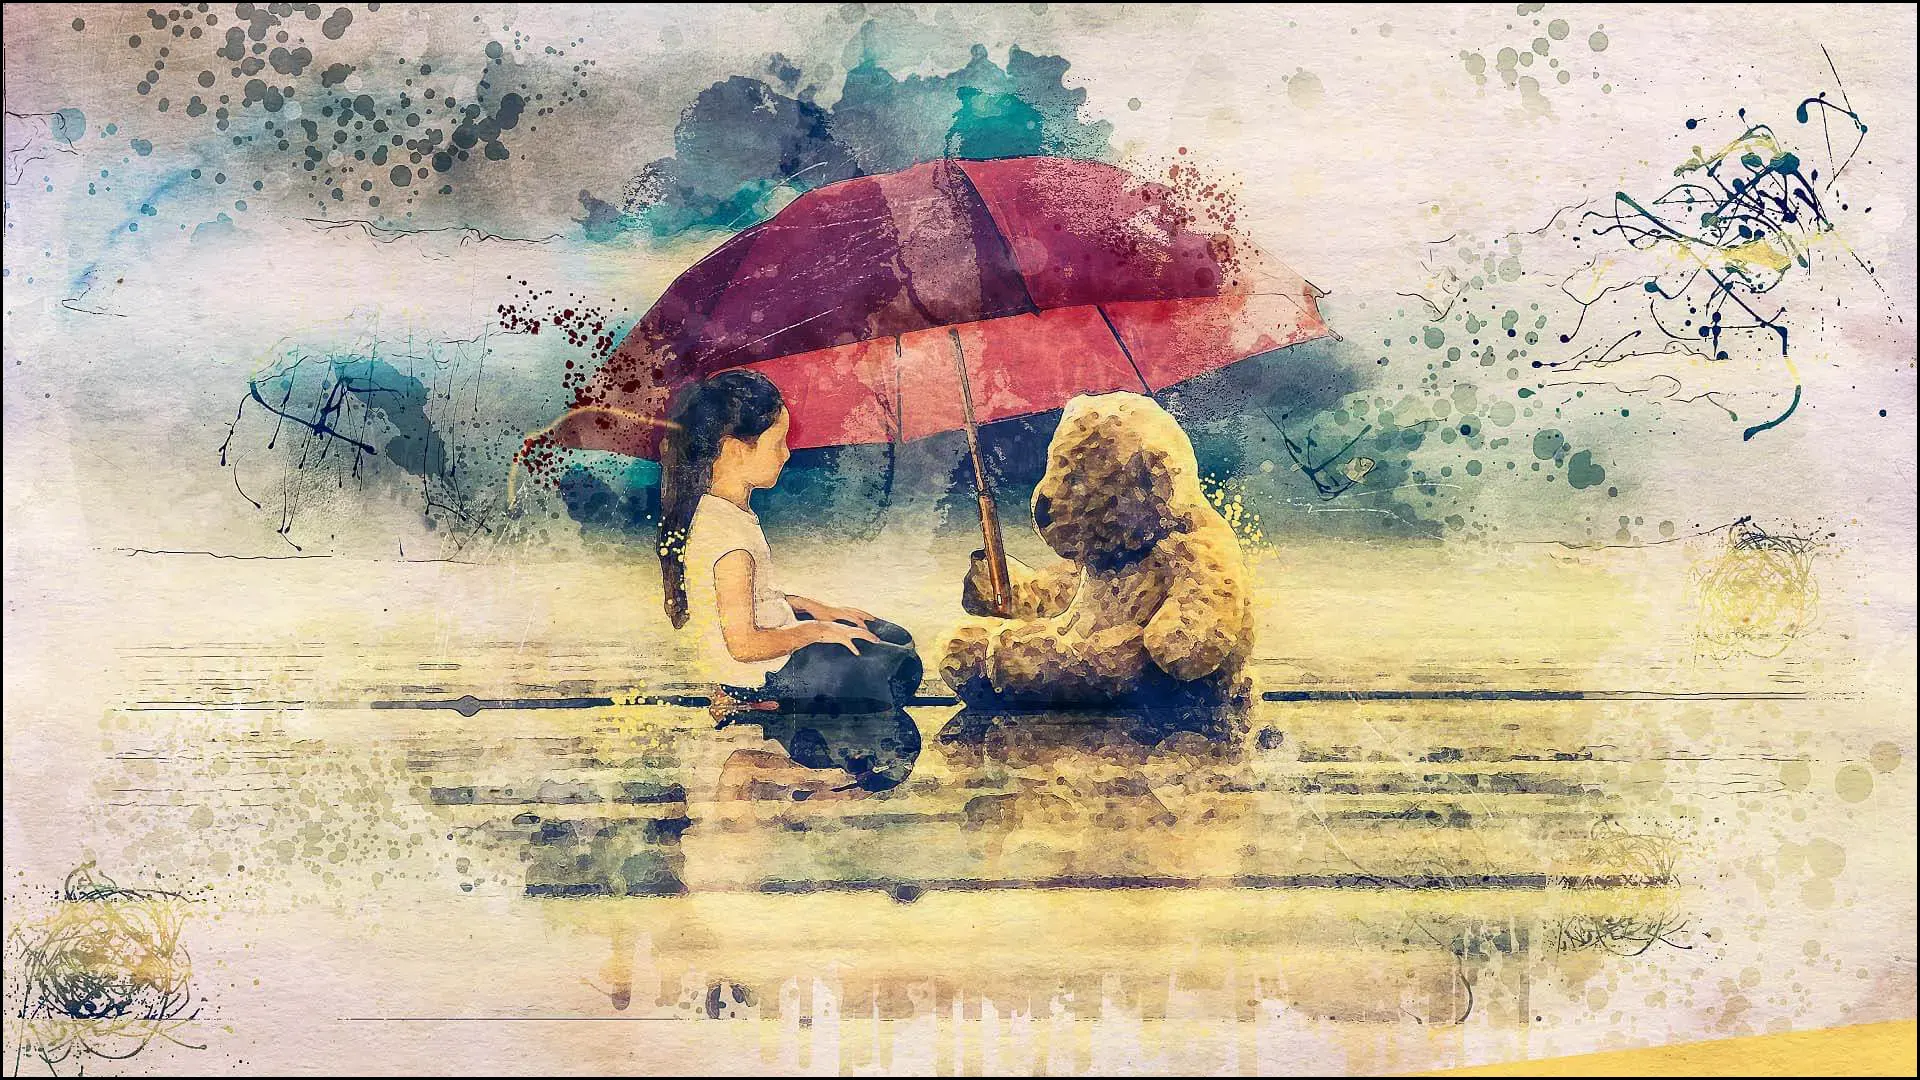 Kamal Webb image design of a teddy bear and girl under an umbrella.